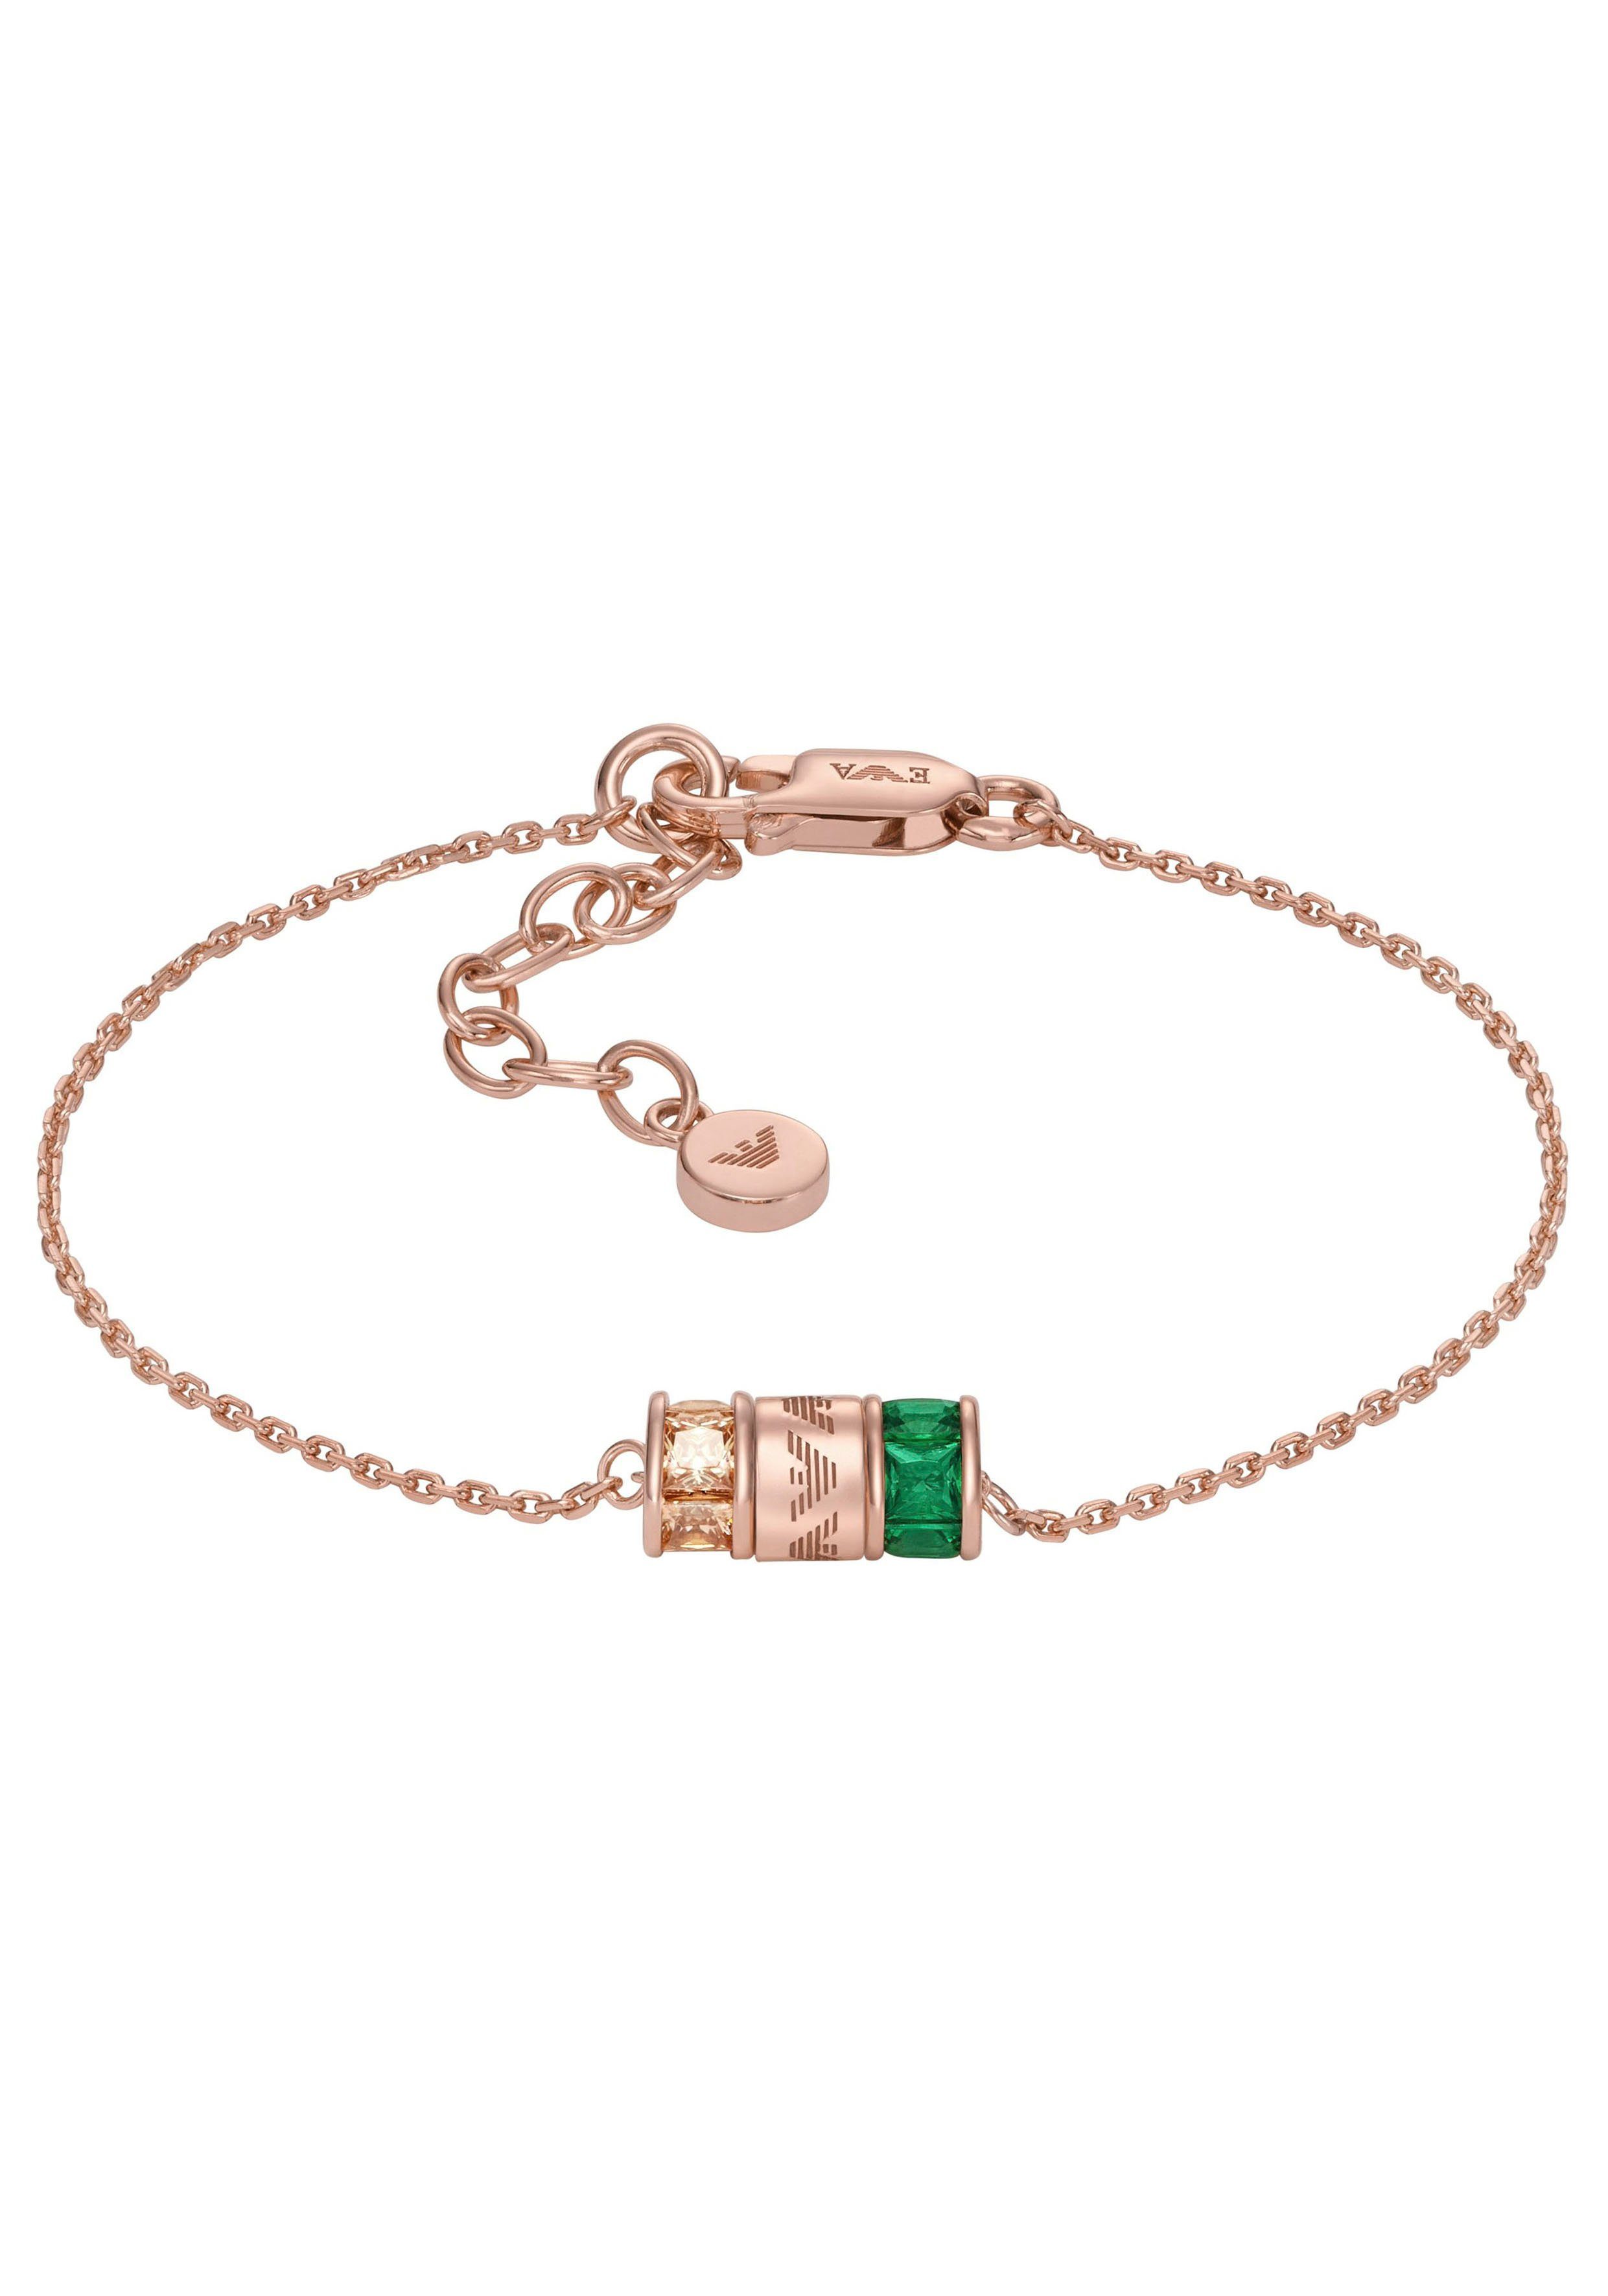 Emporio Armani Armband EG3579221, EG3580040, mit Zirkonia (synth) roségoldfarben-champagne-grün | Silberarmbänder